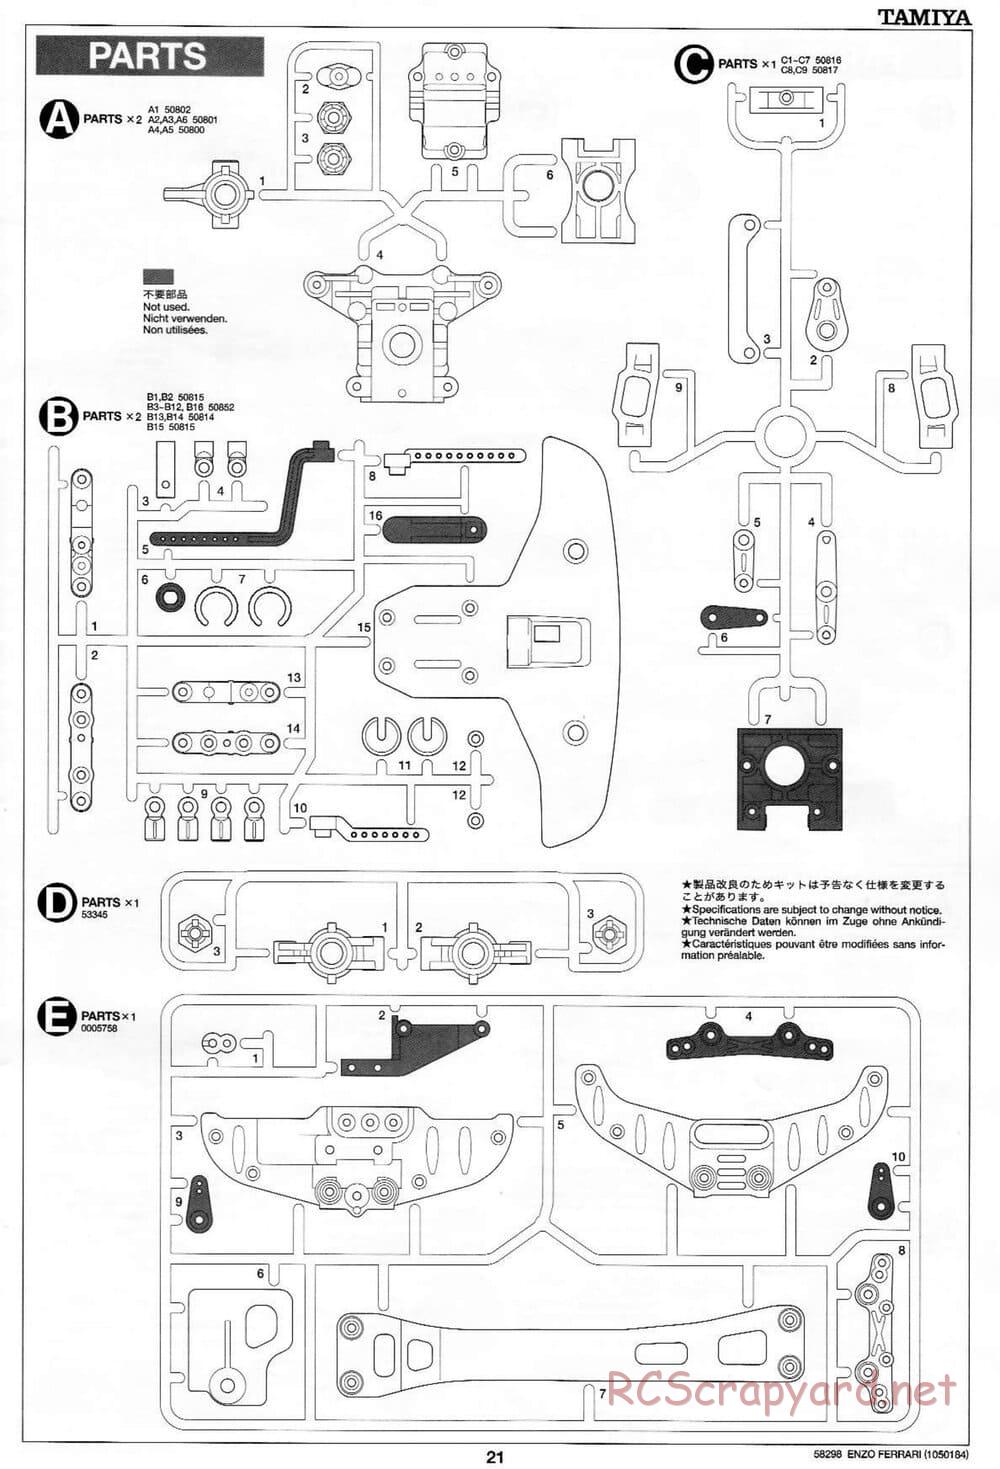 Tamiya - Enzo Ferrari - TB-01 Chassis - Manual - Page 21